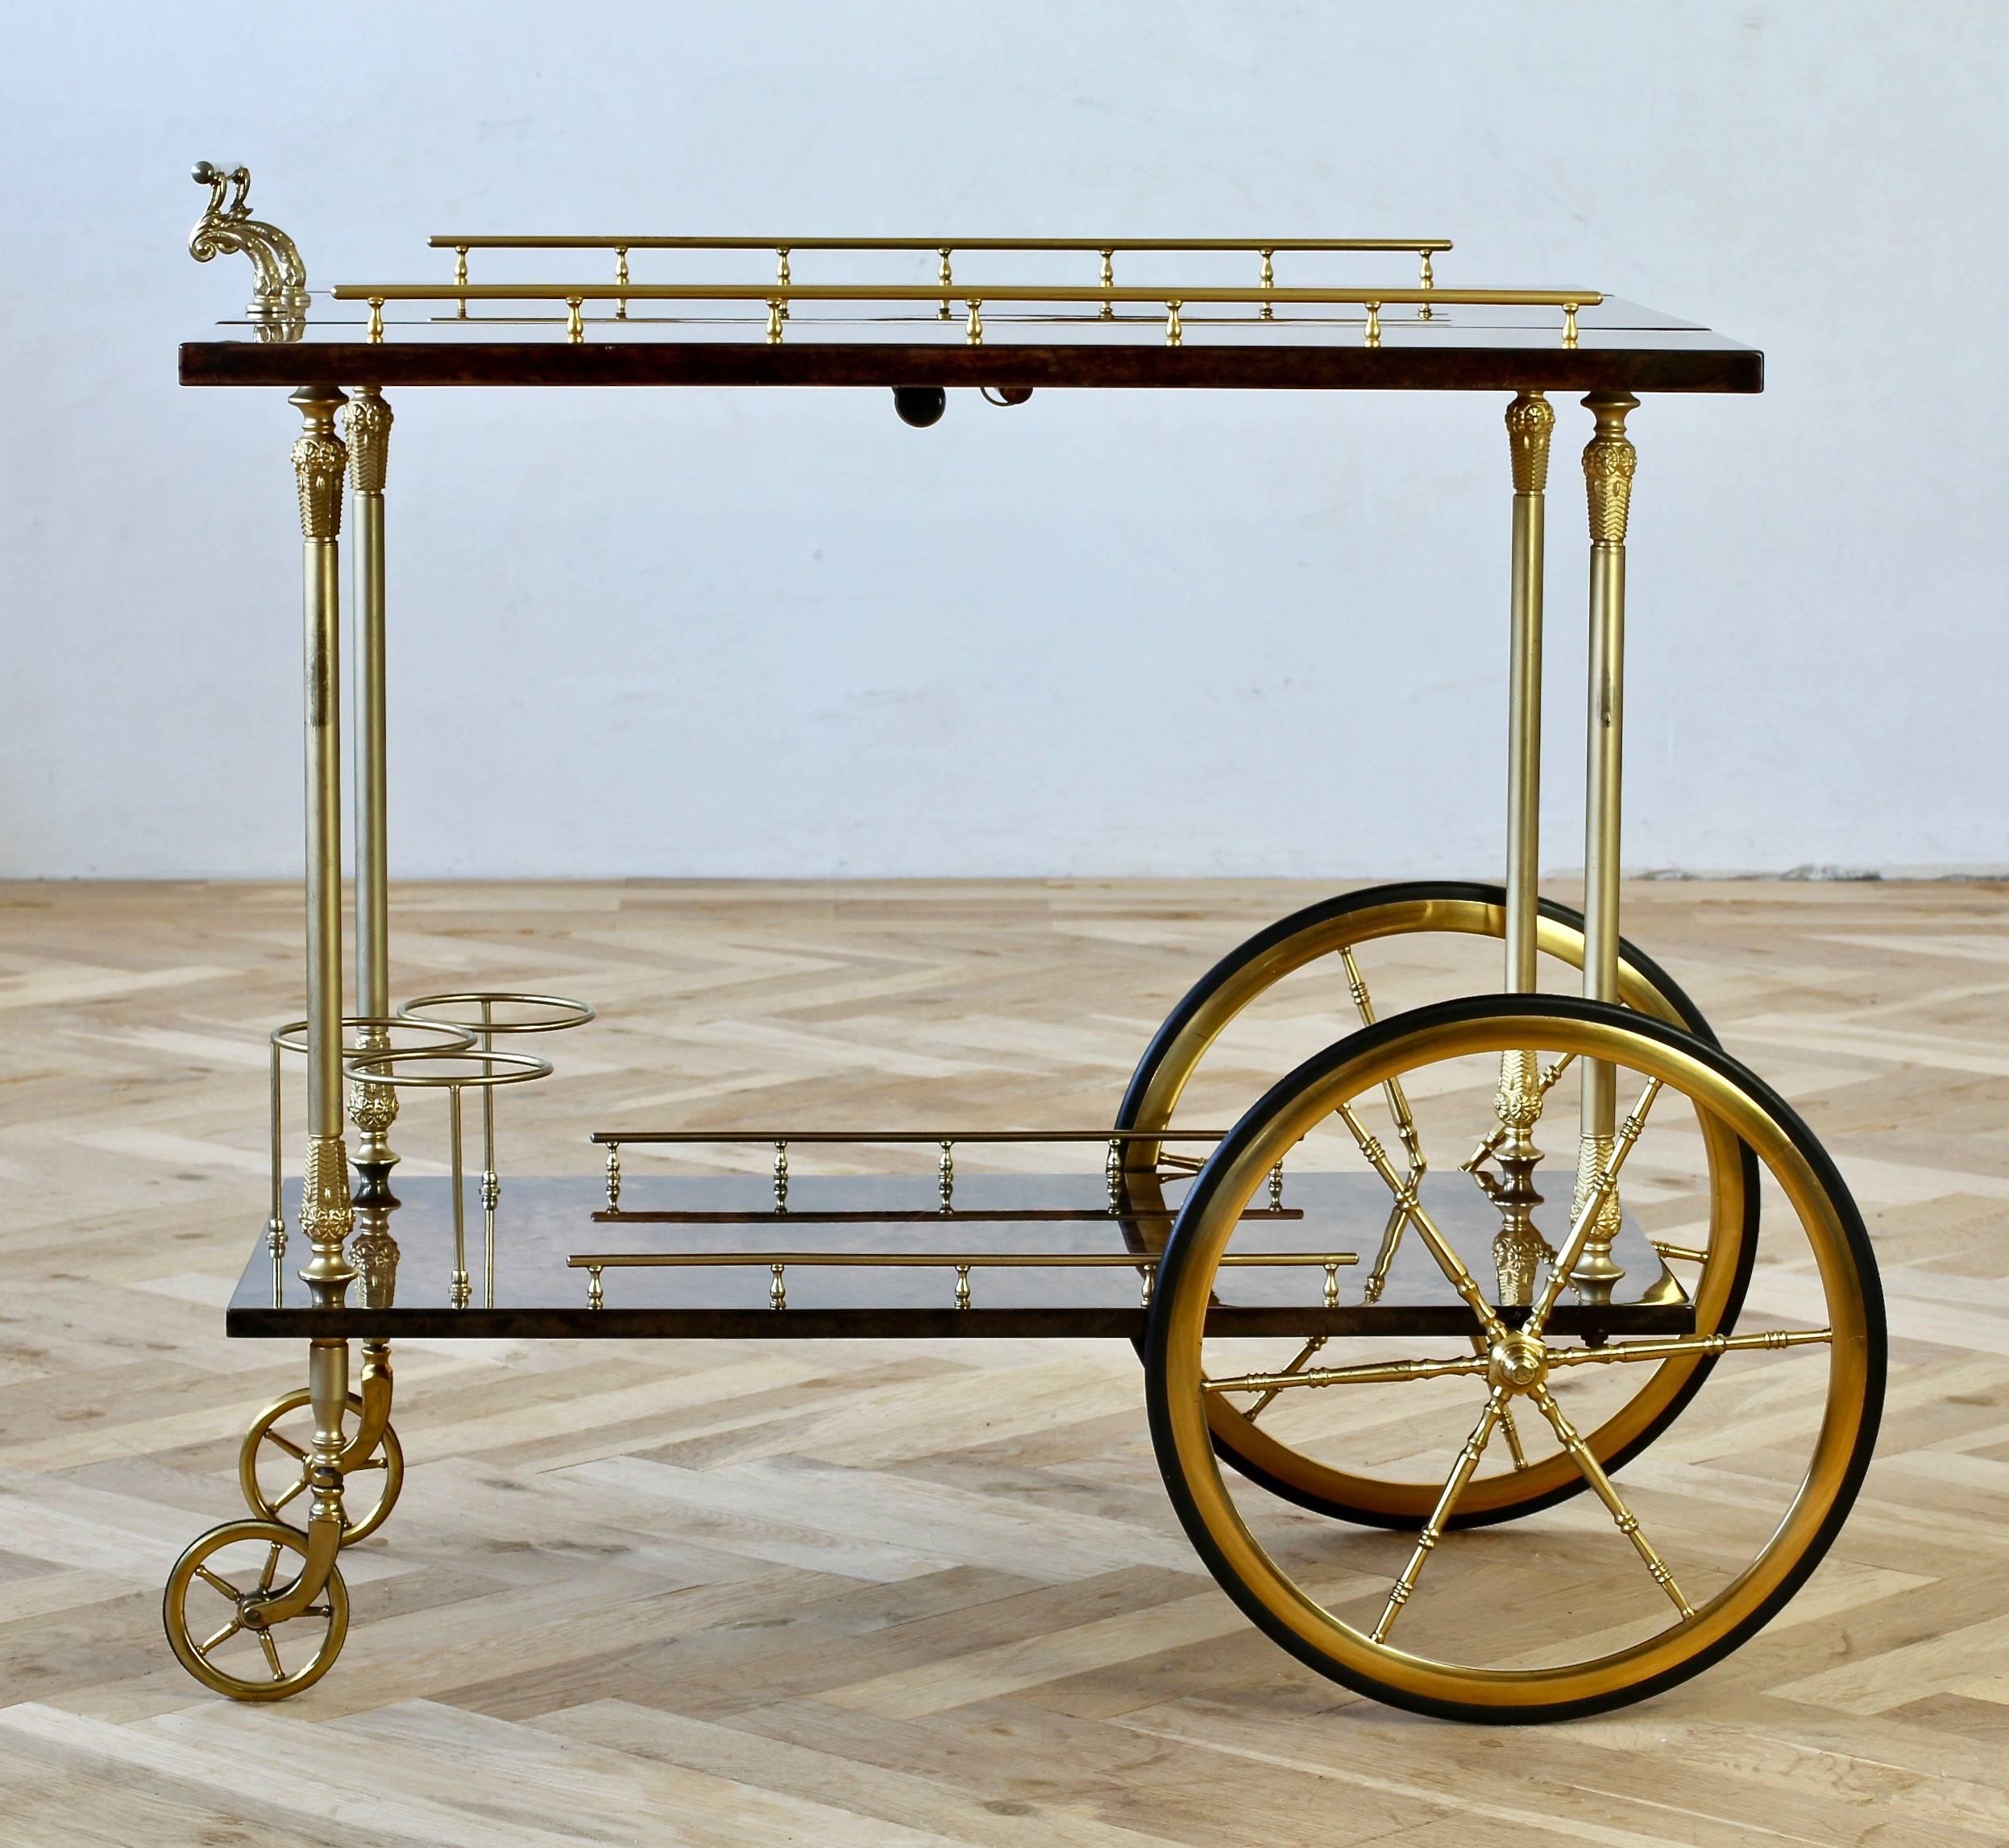 Gilt Aldo Tura 1950s Bar Cart, Tea Trolley or Drinks Stand in Brown Italian Leather